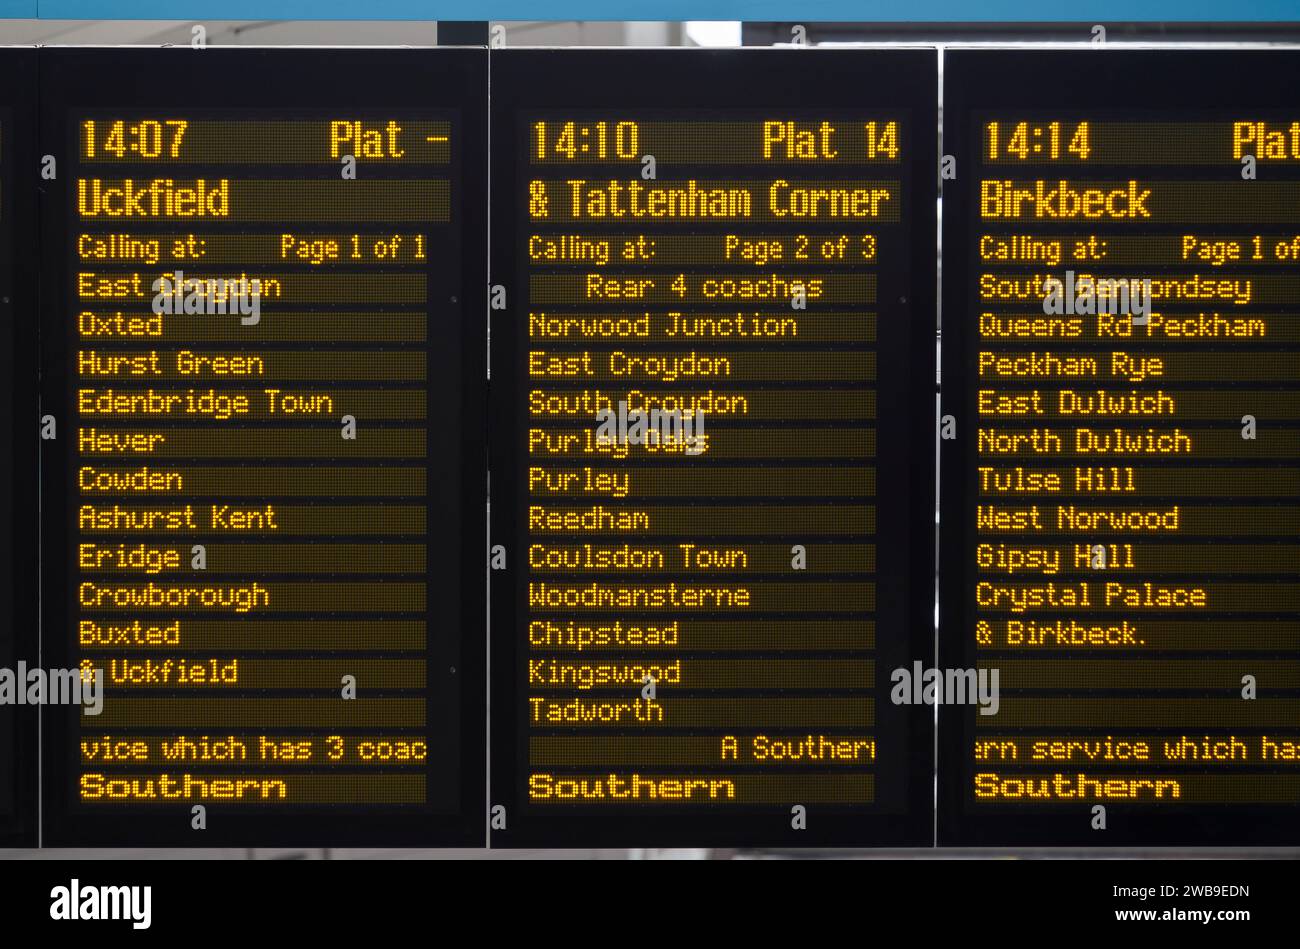 Digital destination display on a railway station platform, London Bridge Station, London, England. Stock Photo